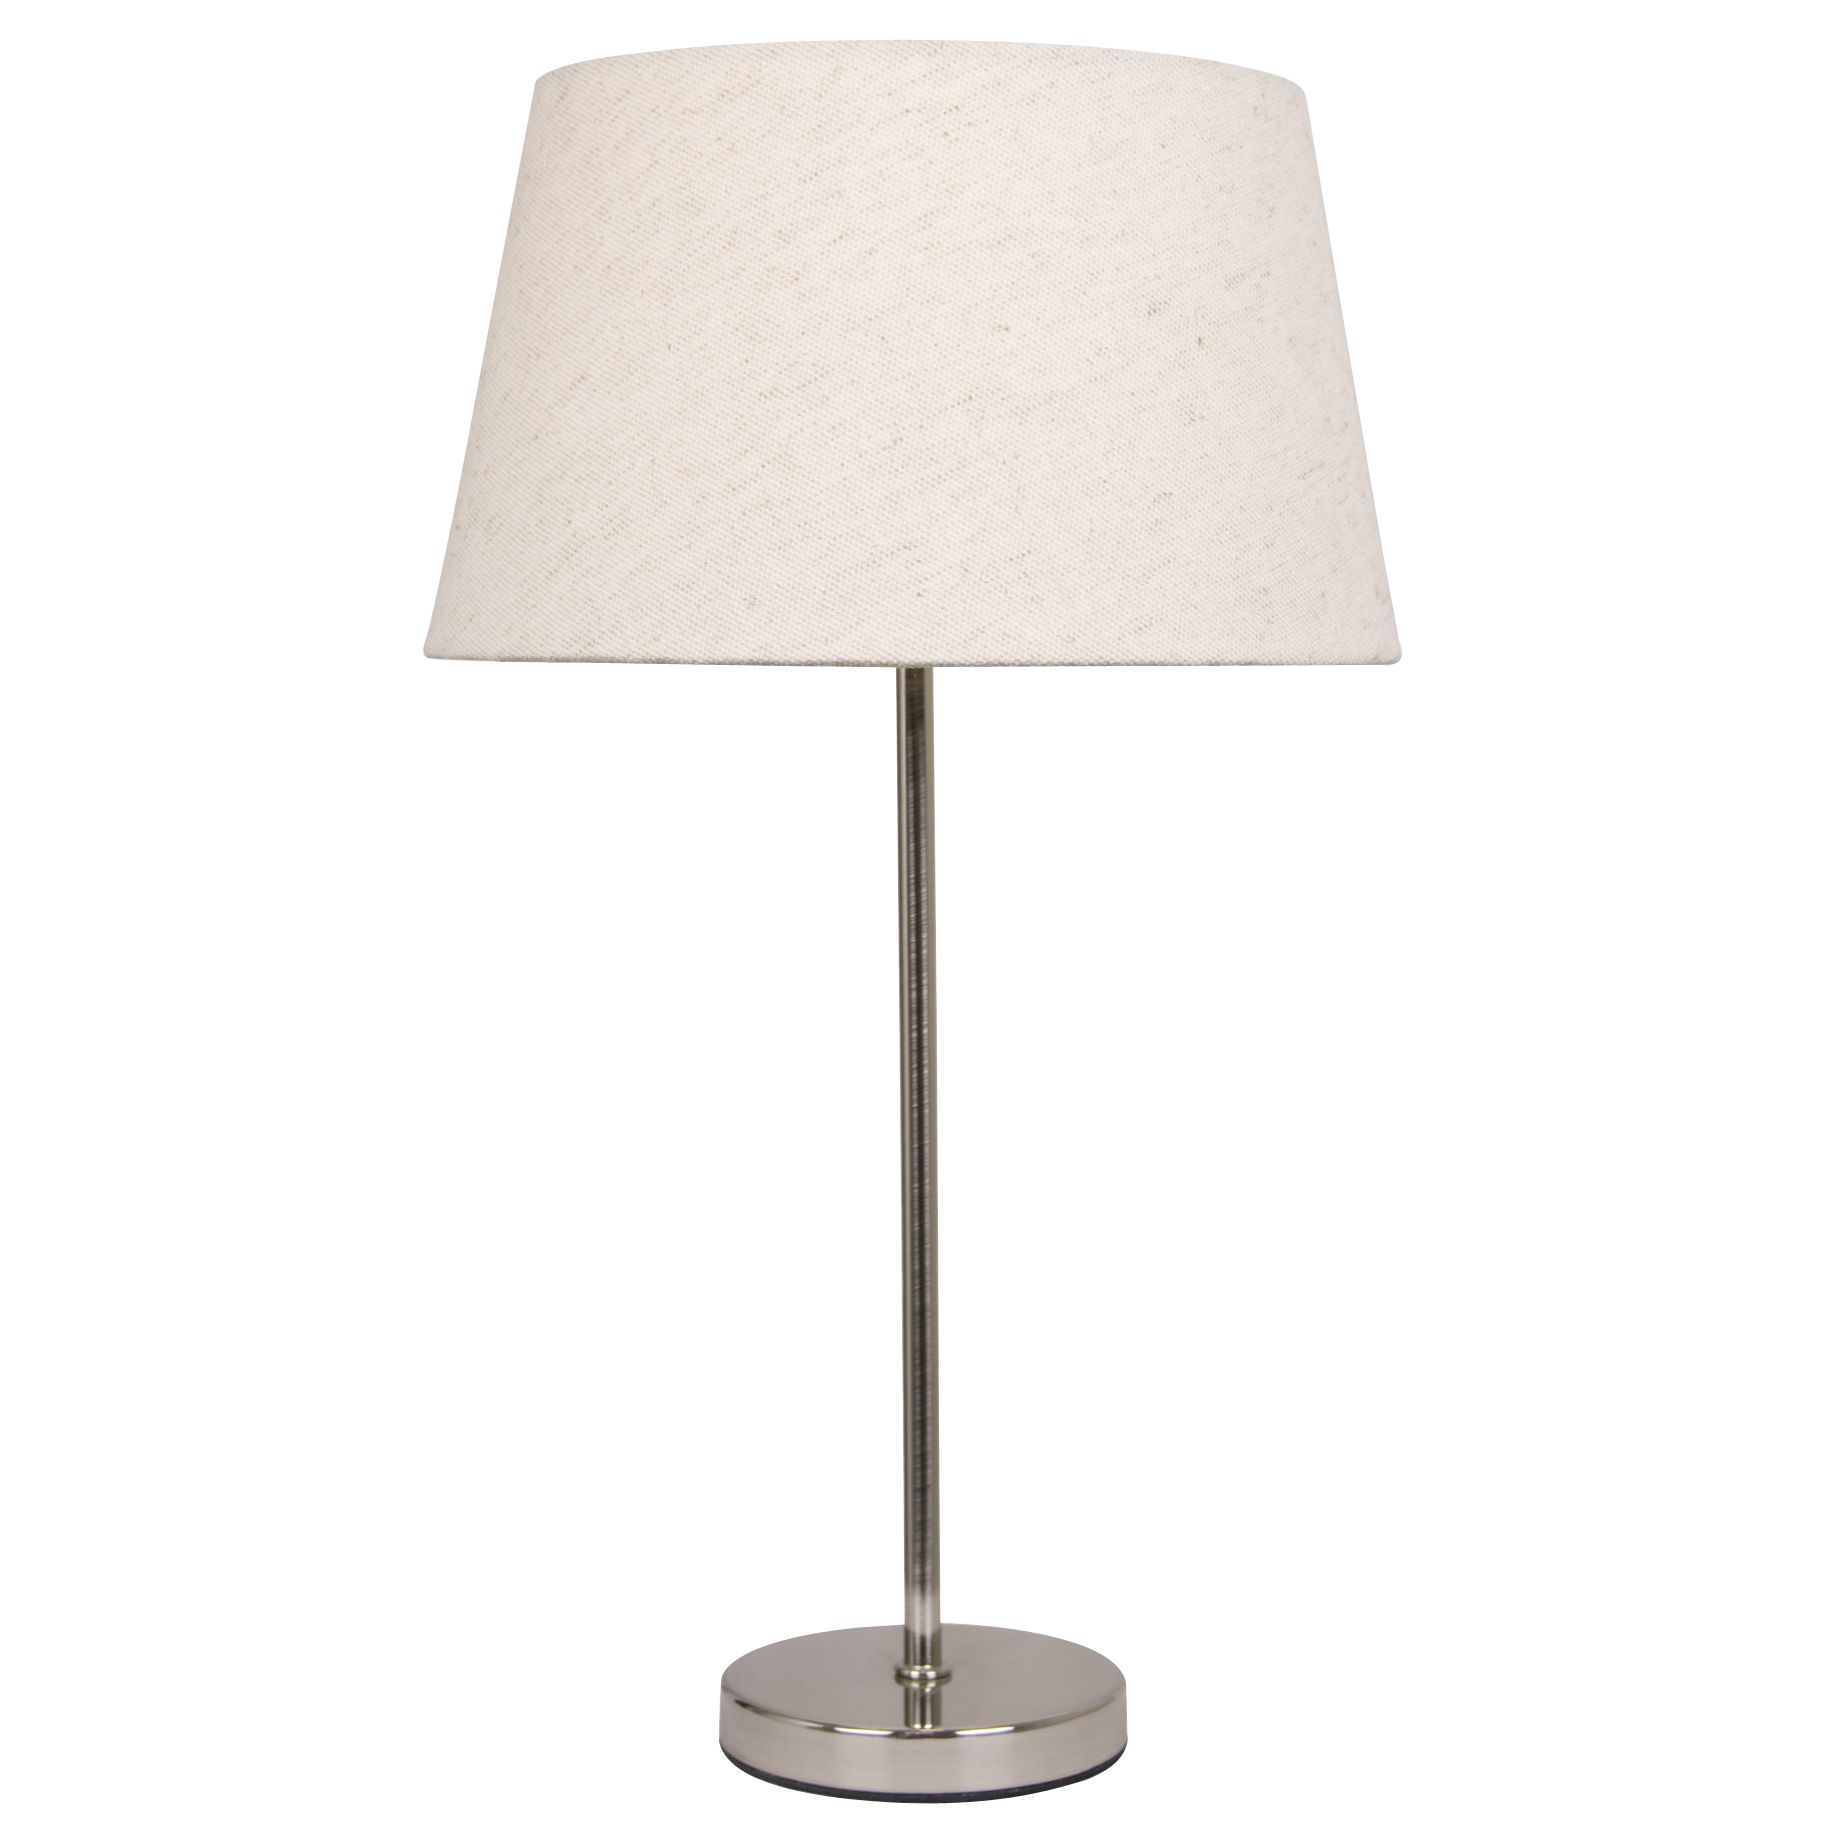 John Lewis Nicole Table Lamp, Linen